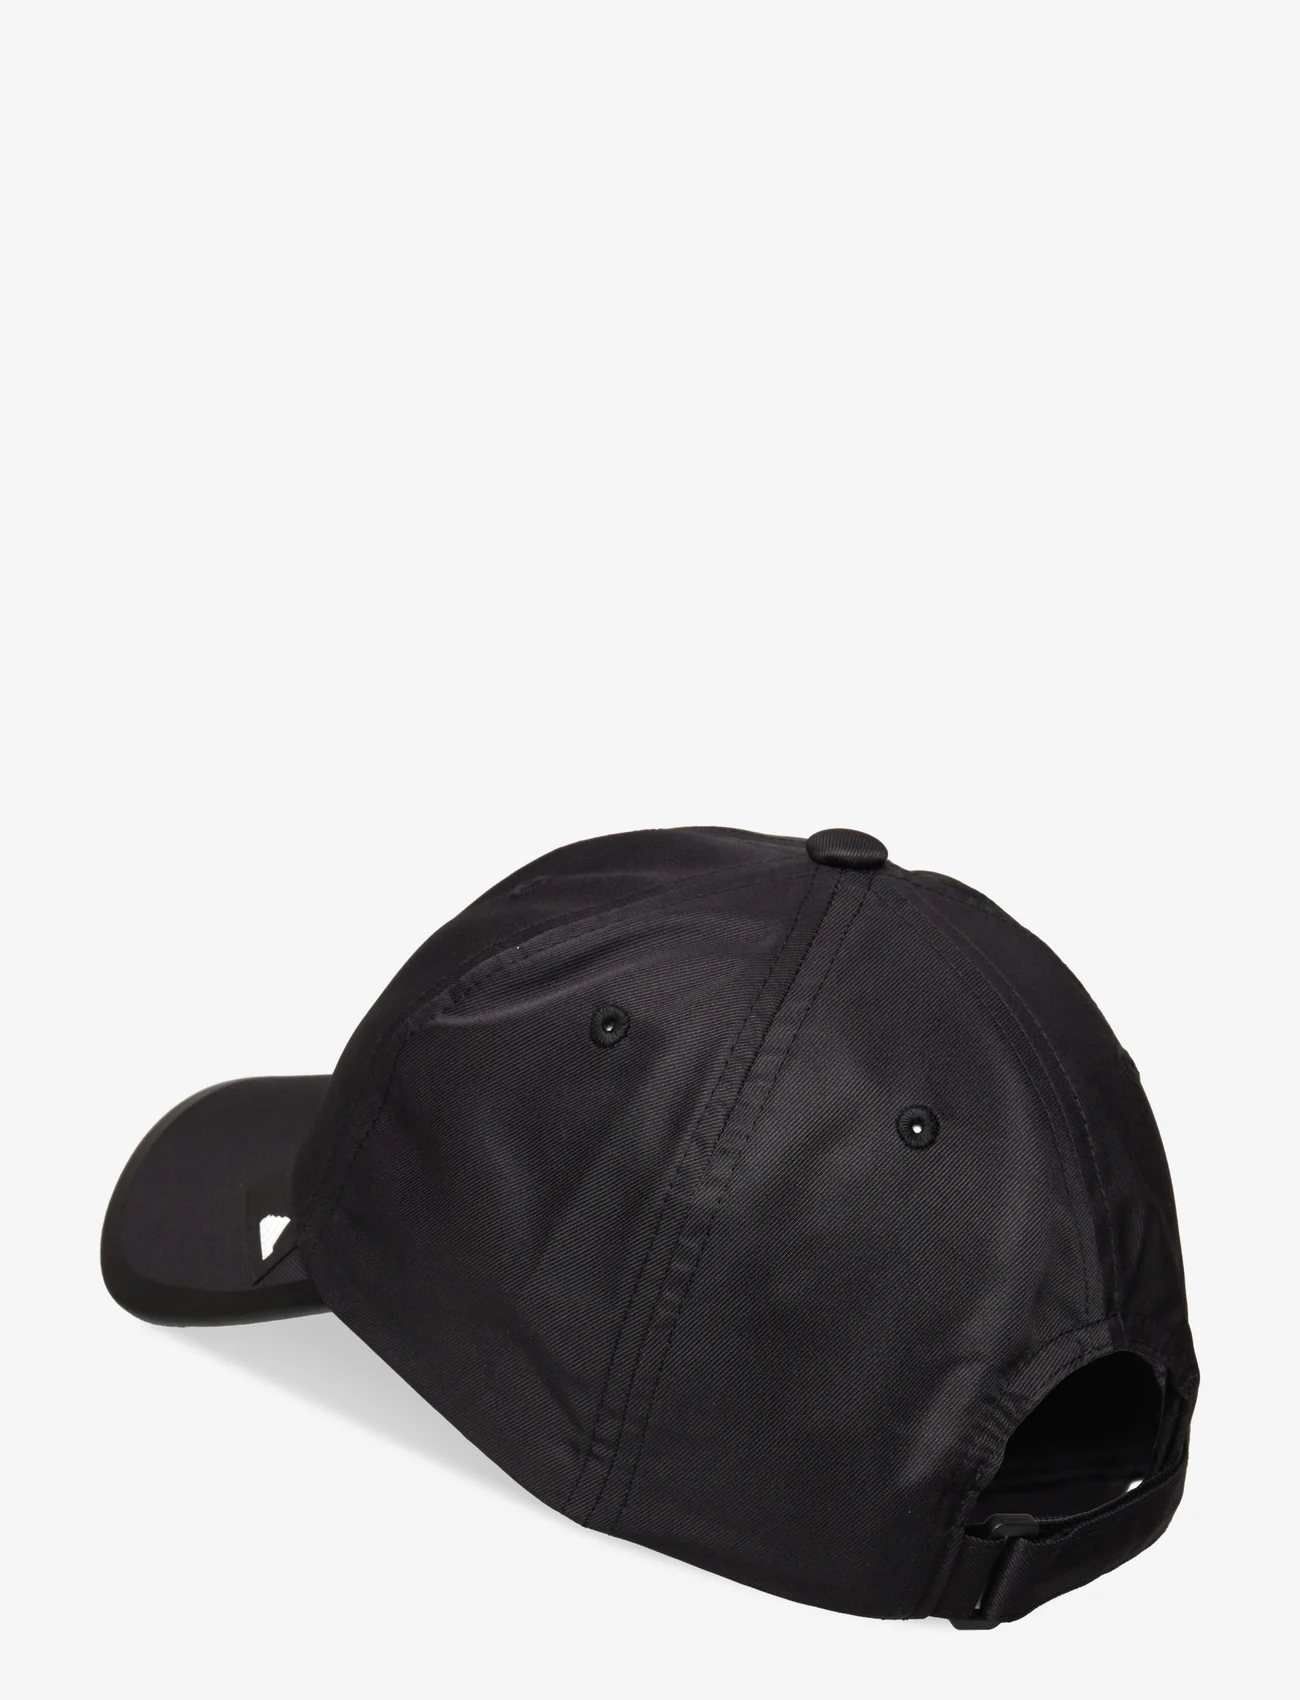 adidas Performance - FI TECH BB CAP - casquettes - black - 1